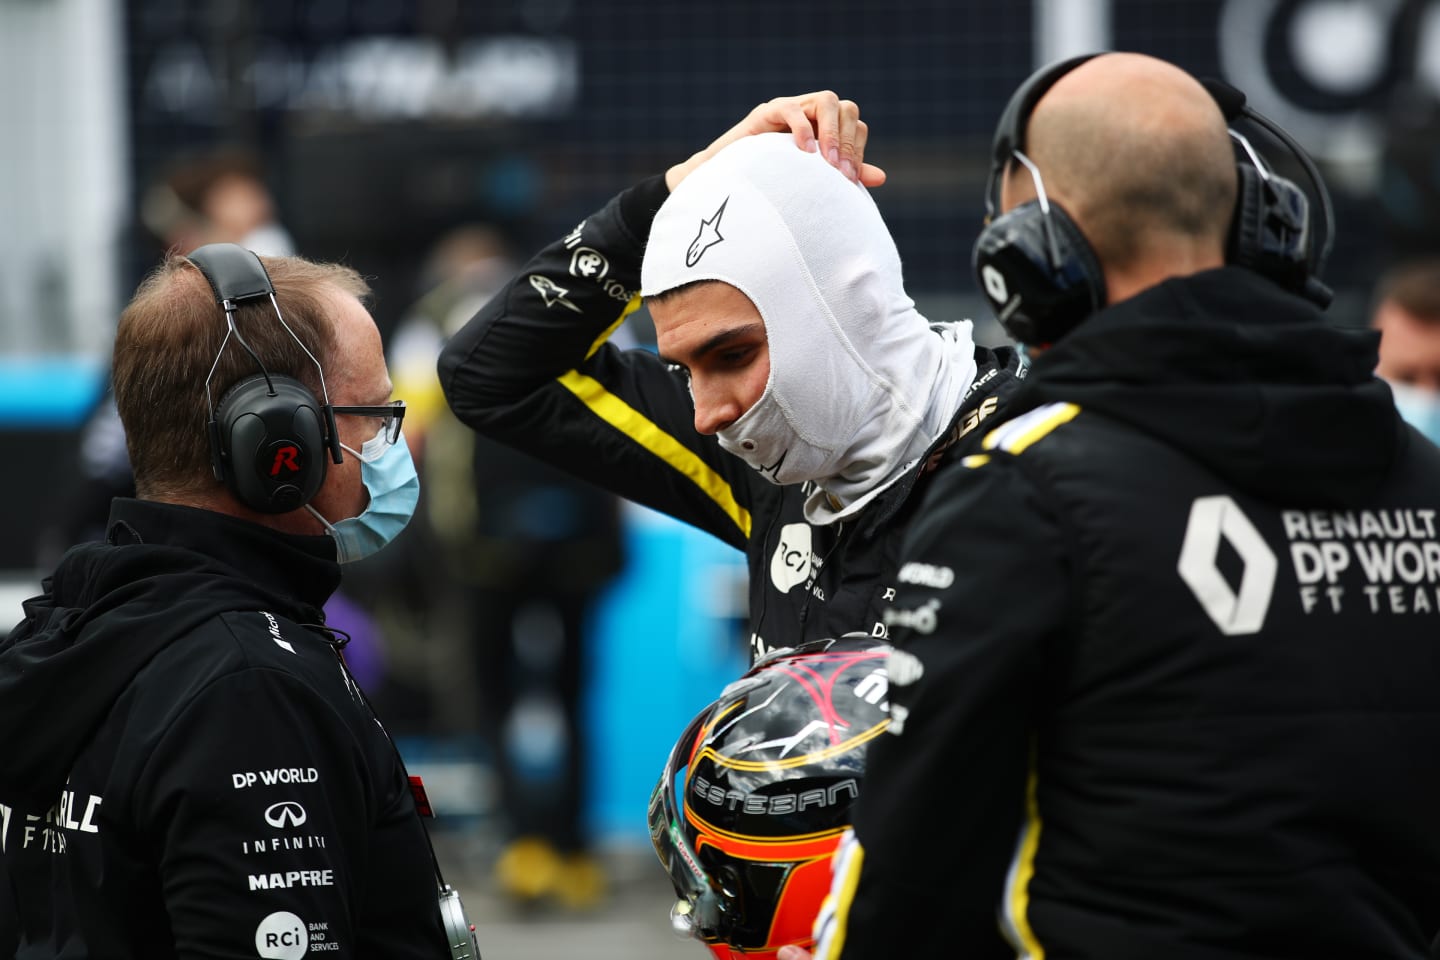 NUERBURG, GERMANY - OCTOBER 11: Esteban Ocon of France and Renault Sport F1 talks to a team member